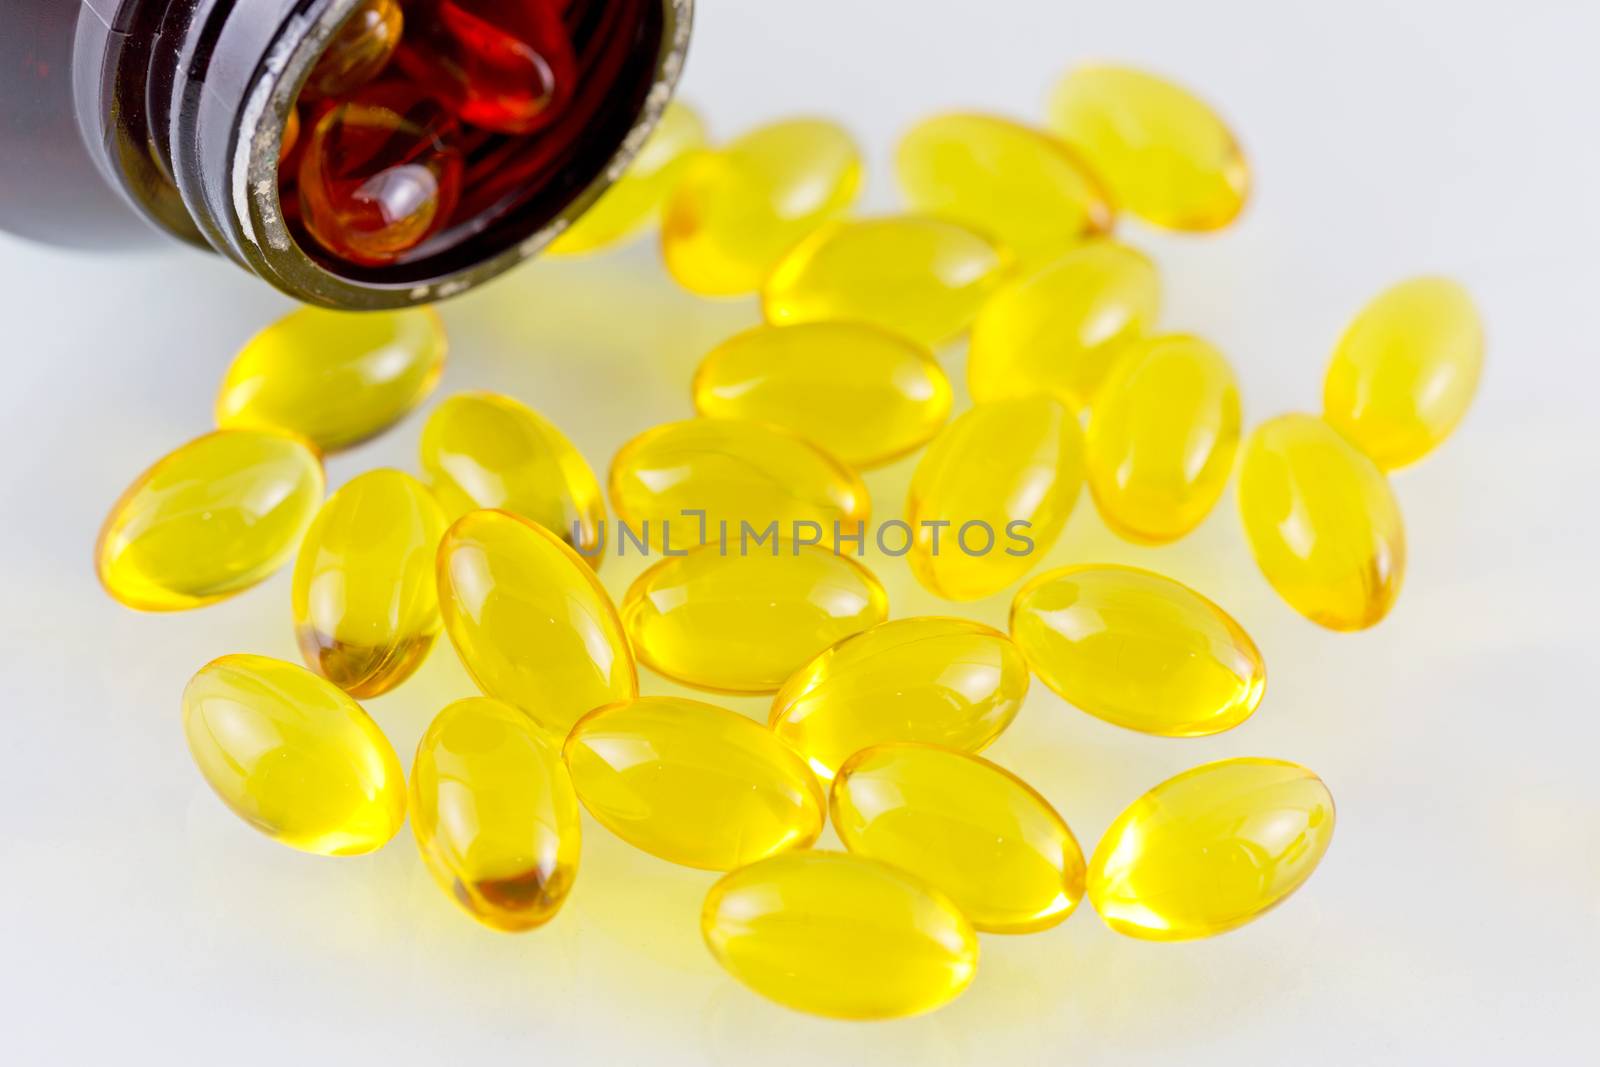 Oil vitamins gel capsules omega 3.